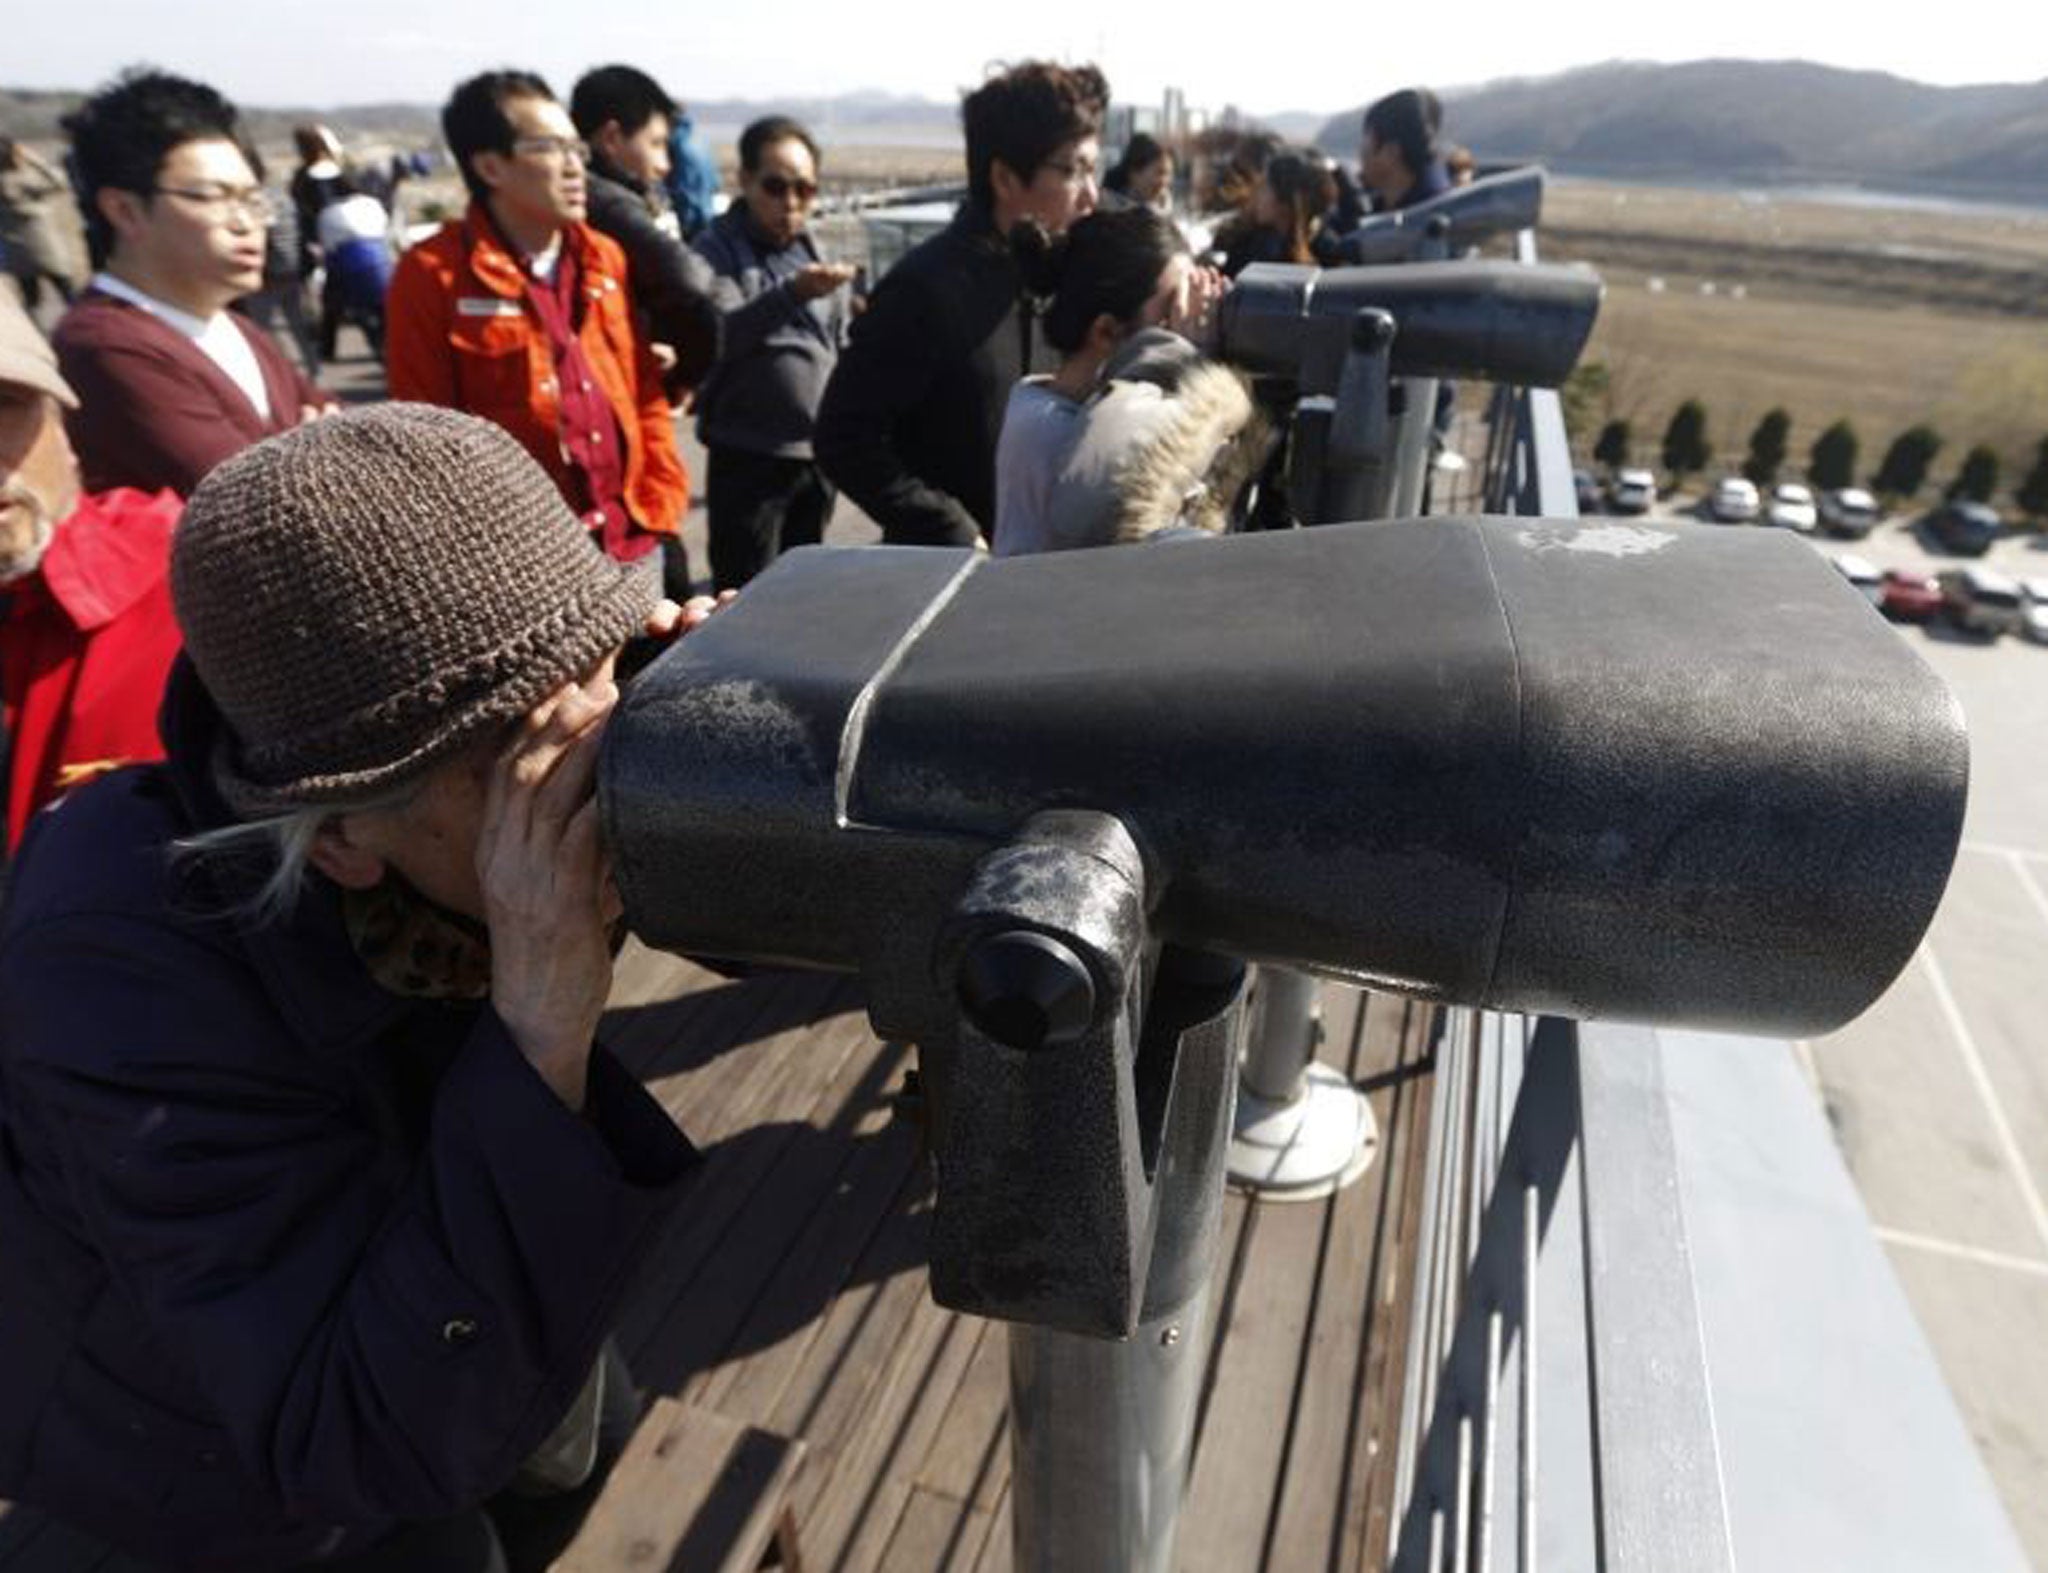 South Koreans look north through binoculars near the demilitarized zone